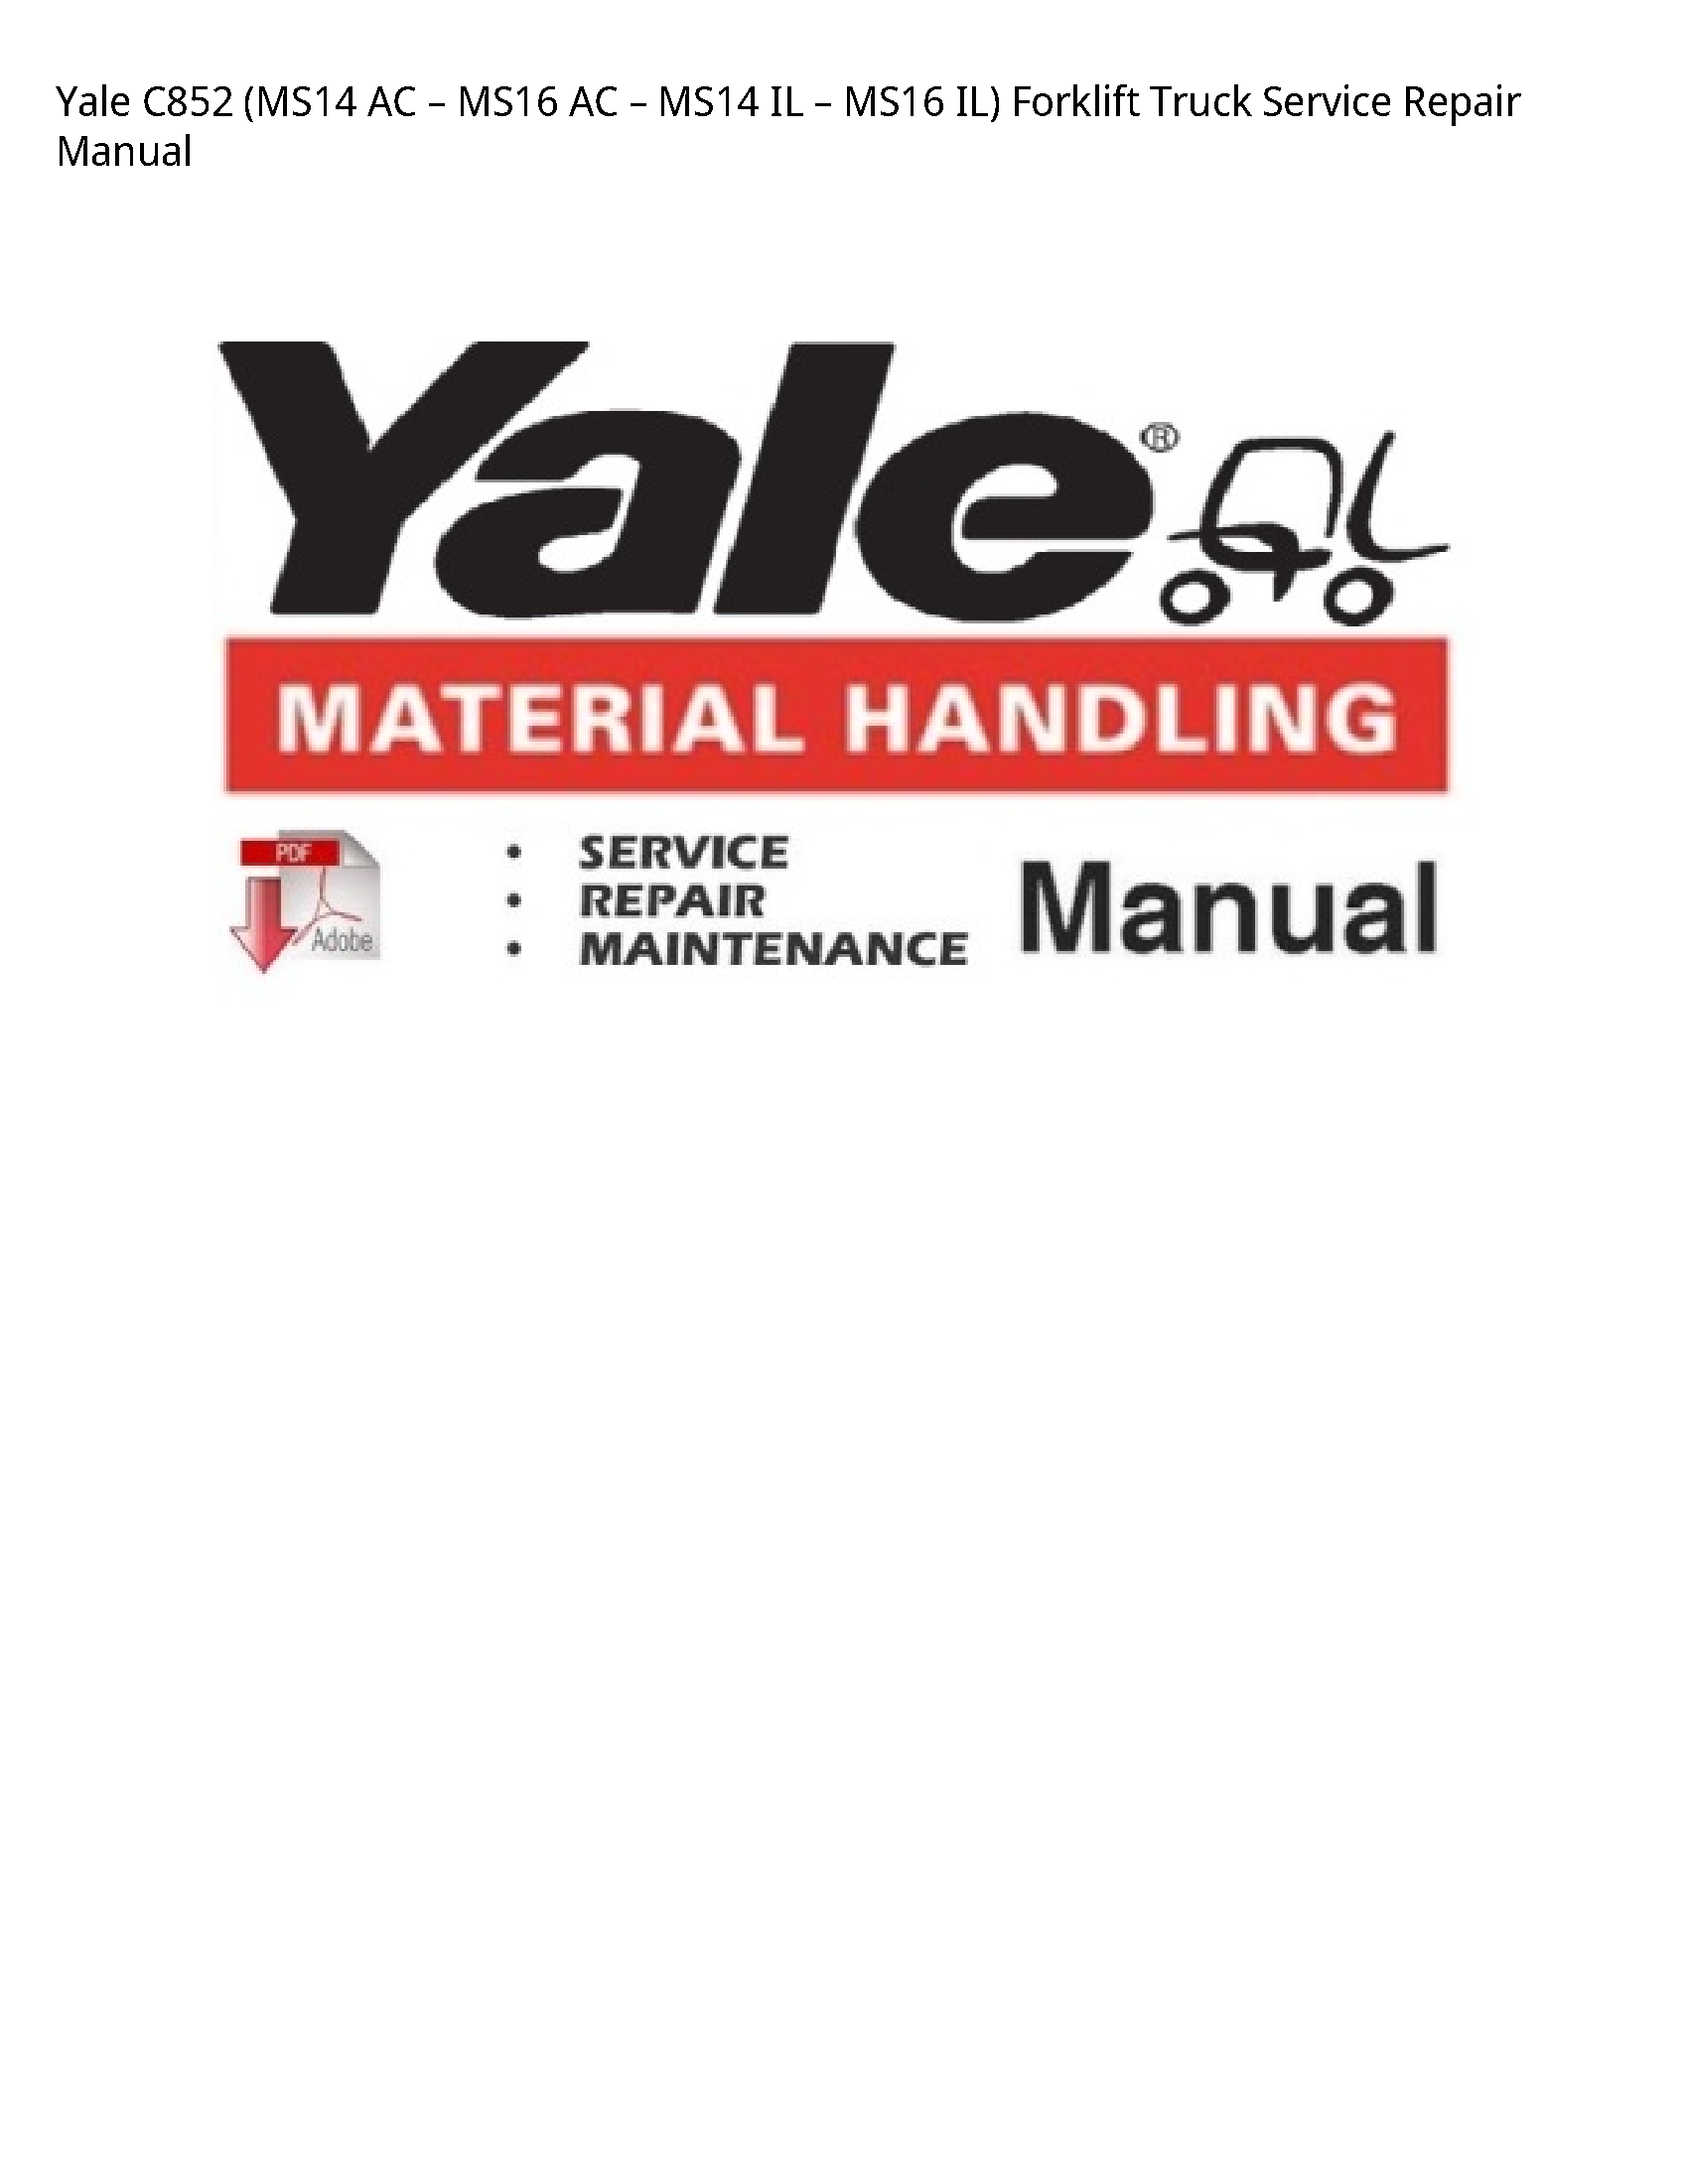 Yale C852 AC AC IL IL) Forklift Truck manual